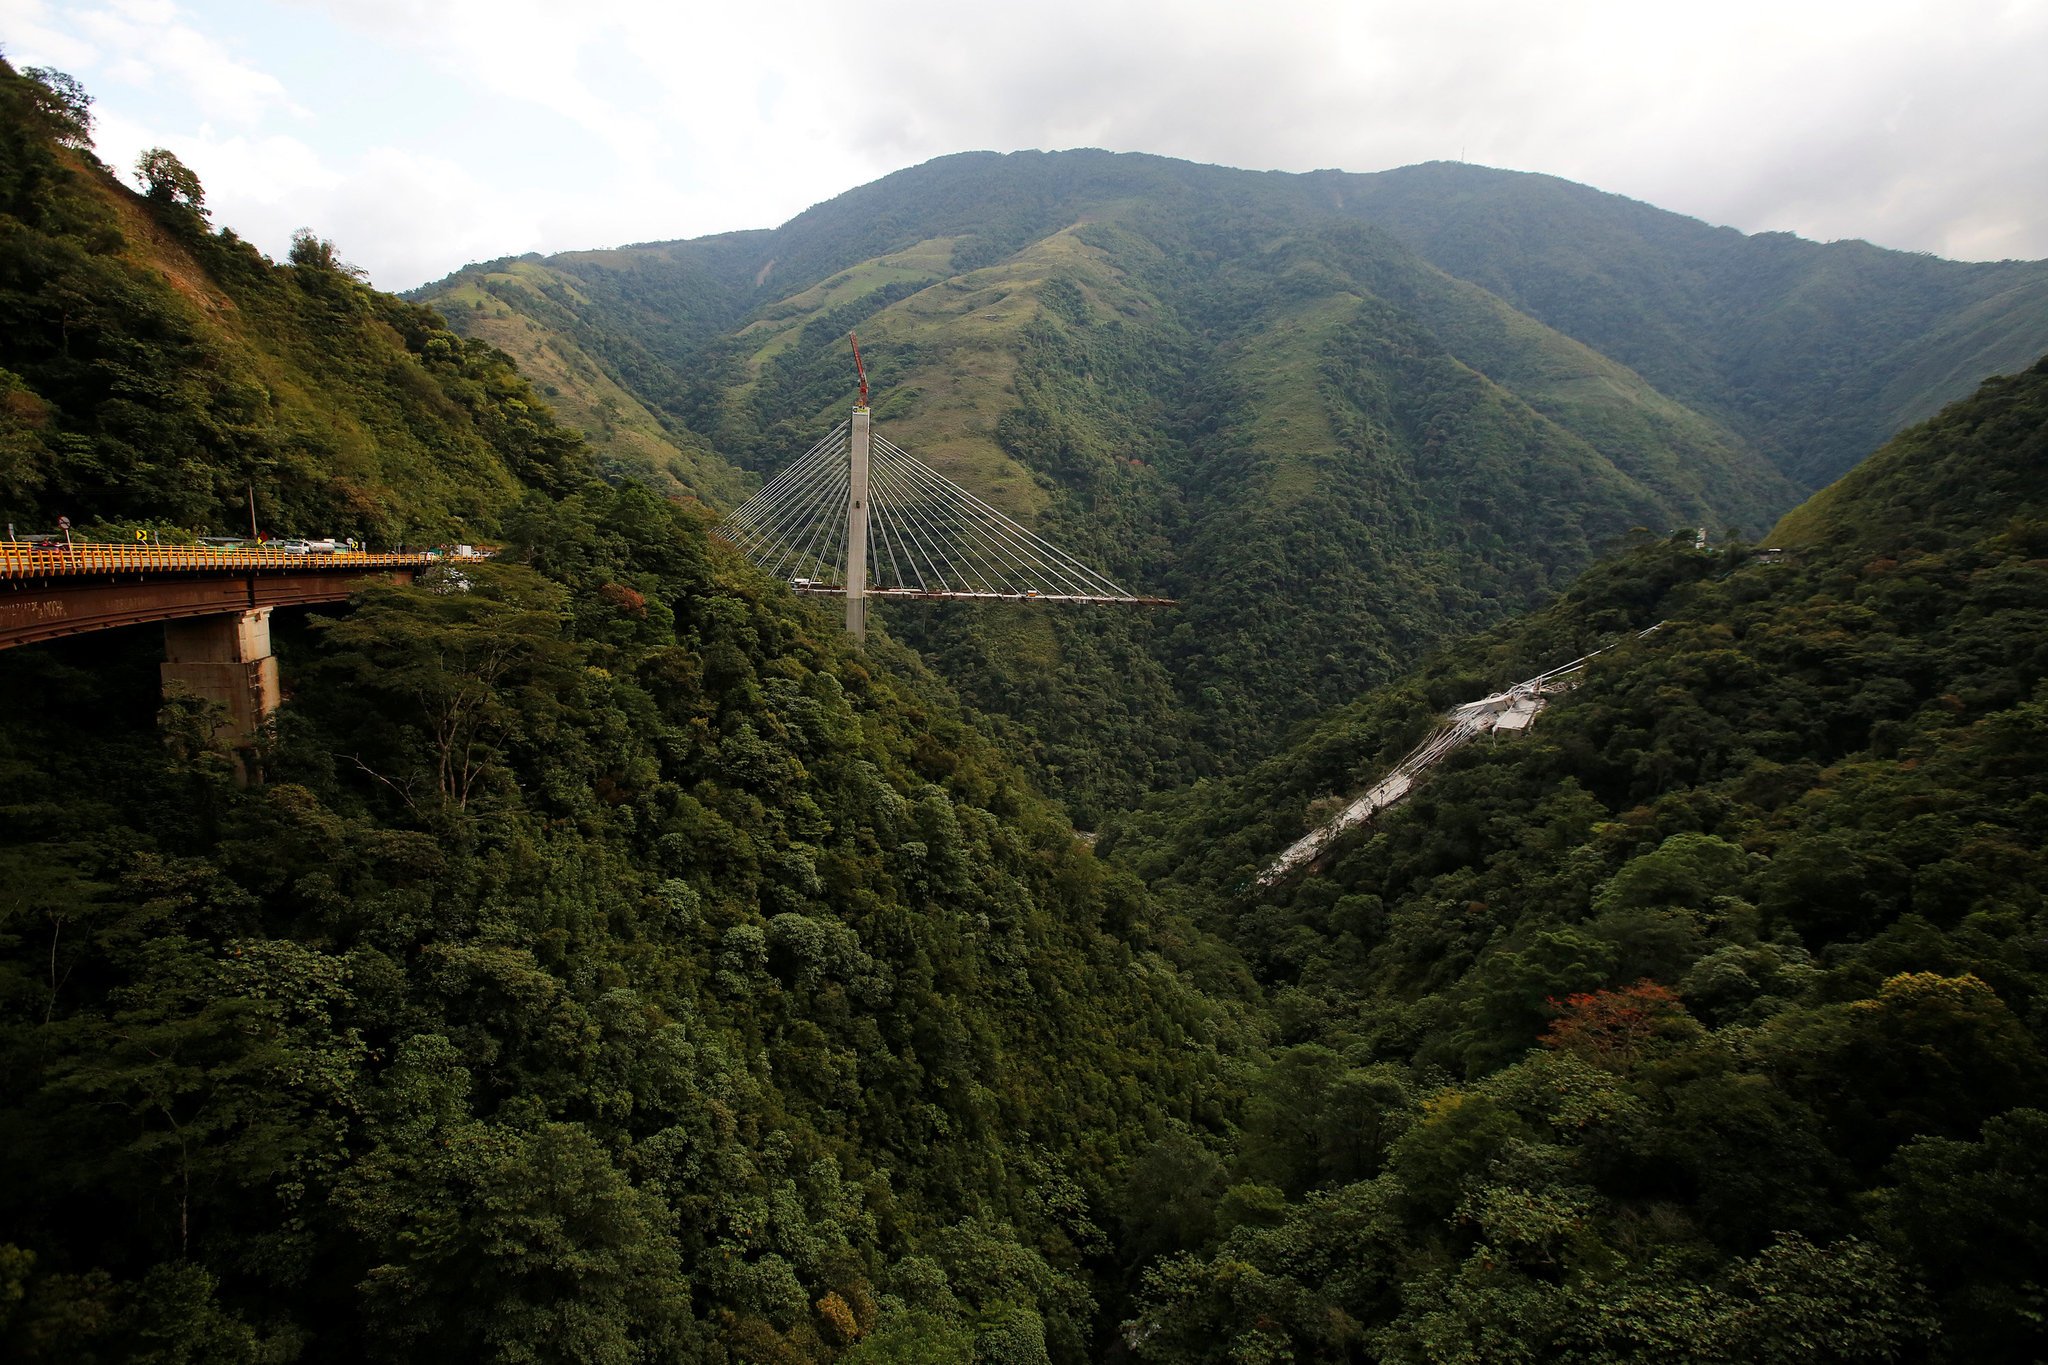 More information about "Κατάρρευση υπό κατασκευή γέφυρας στην Κολομβία"